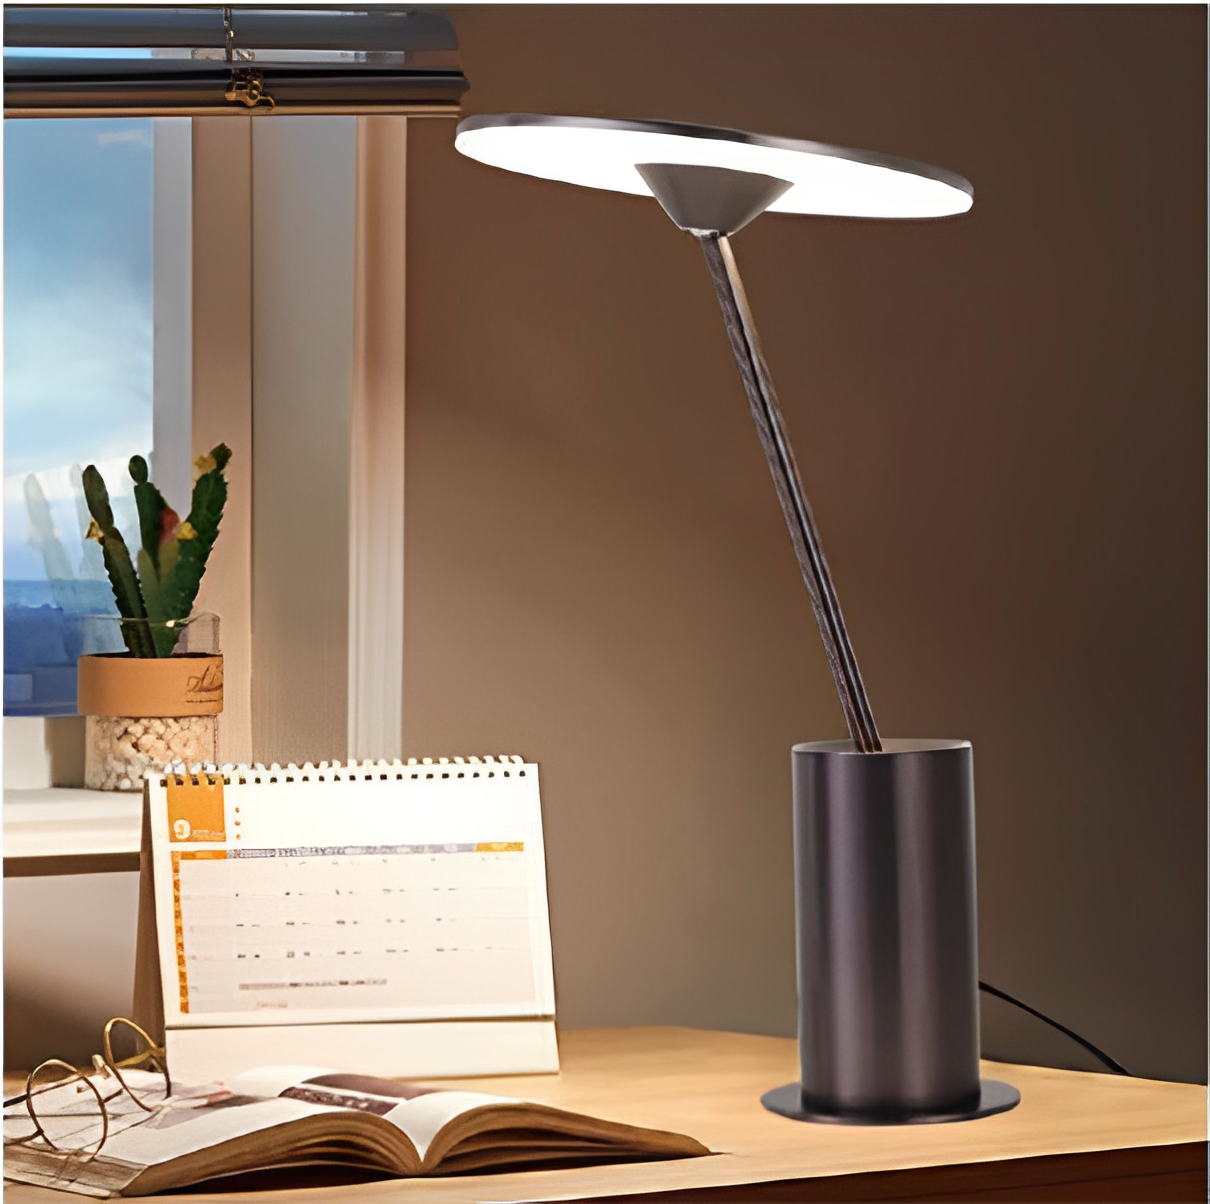 https://www.wonledlight.com/modern-creative-luxury-hotel-home-장식-metal-base-bed-side-indoor-led-table-lamp-product/